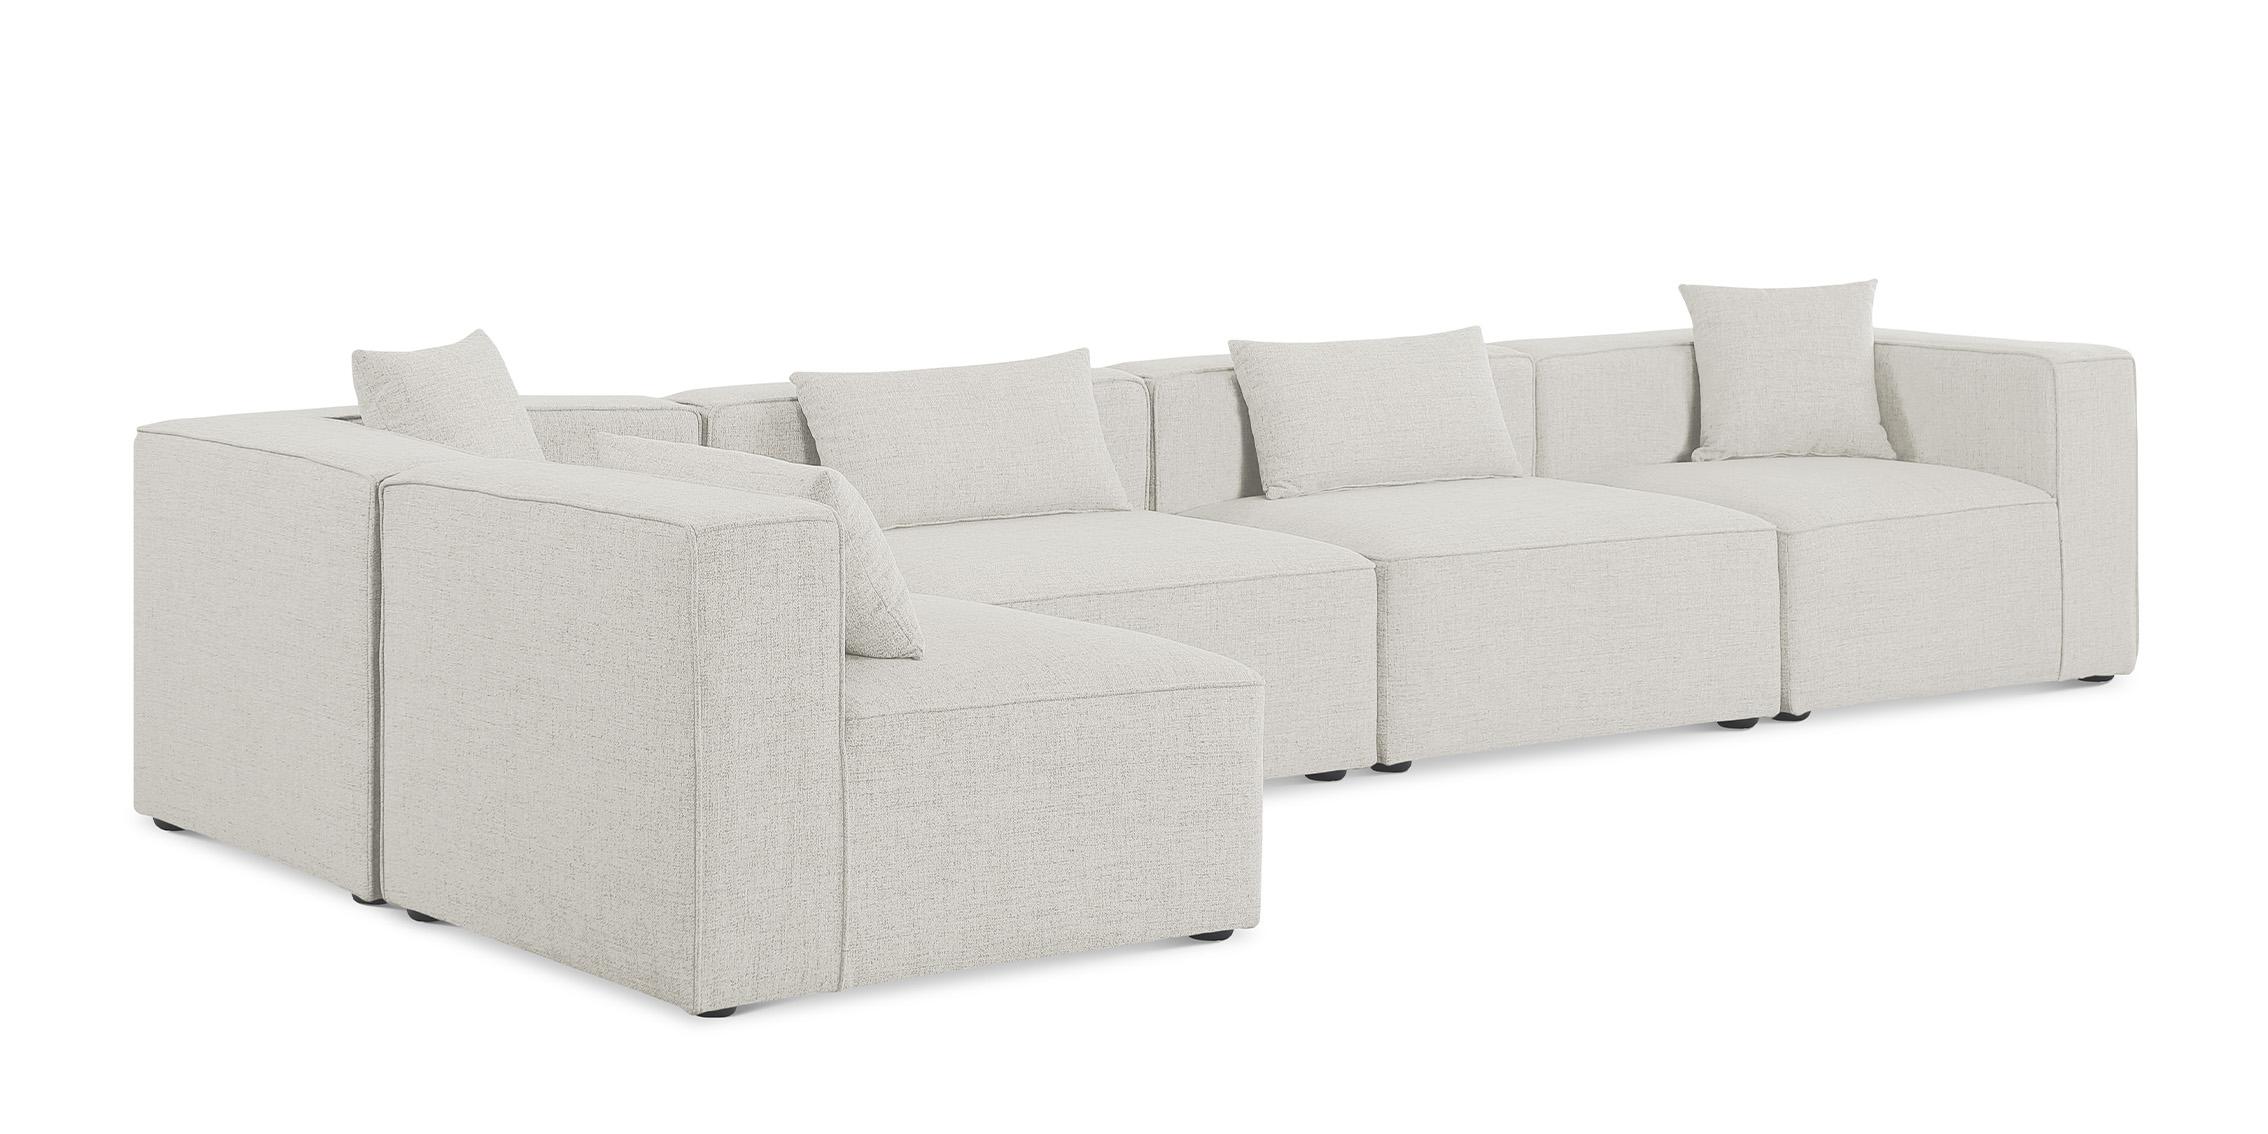 Contemporary, Modern Modular Sectional Sofa CUBE 630Cream-Sec5D 630Cream-Sec5D in Cream Linen